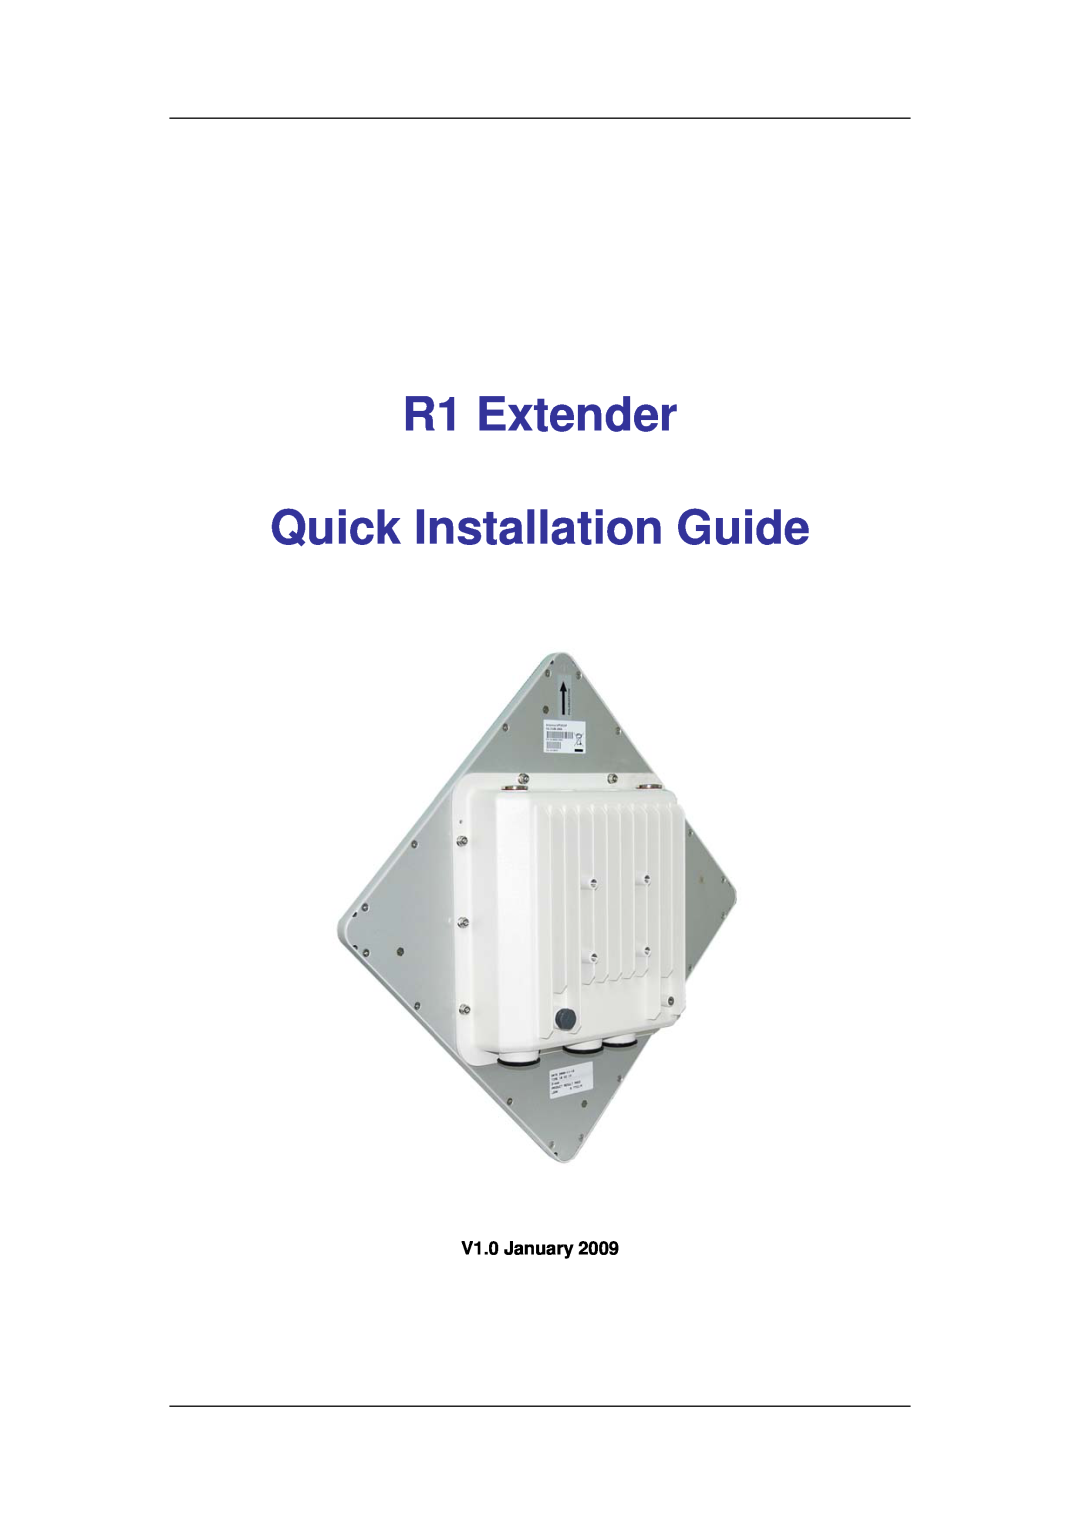 Z-Com manual V1.0 January, R1 Extender Quick Installation Guide 